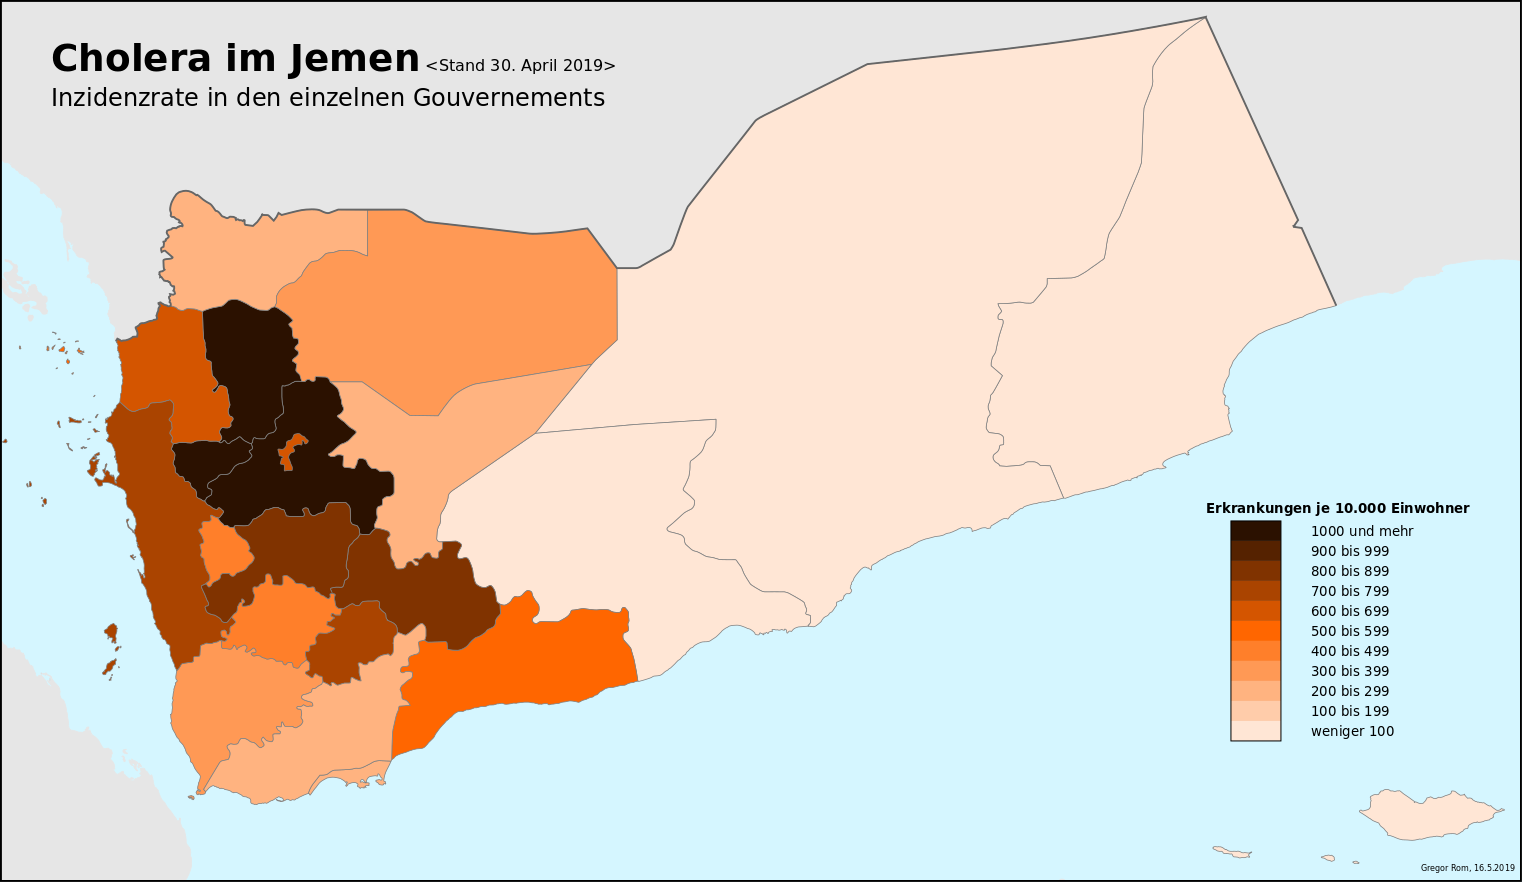 File:Cholera Jemen Inzidenzrate.png